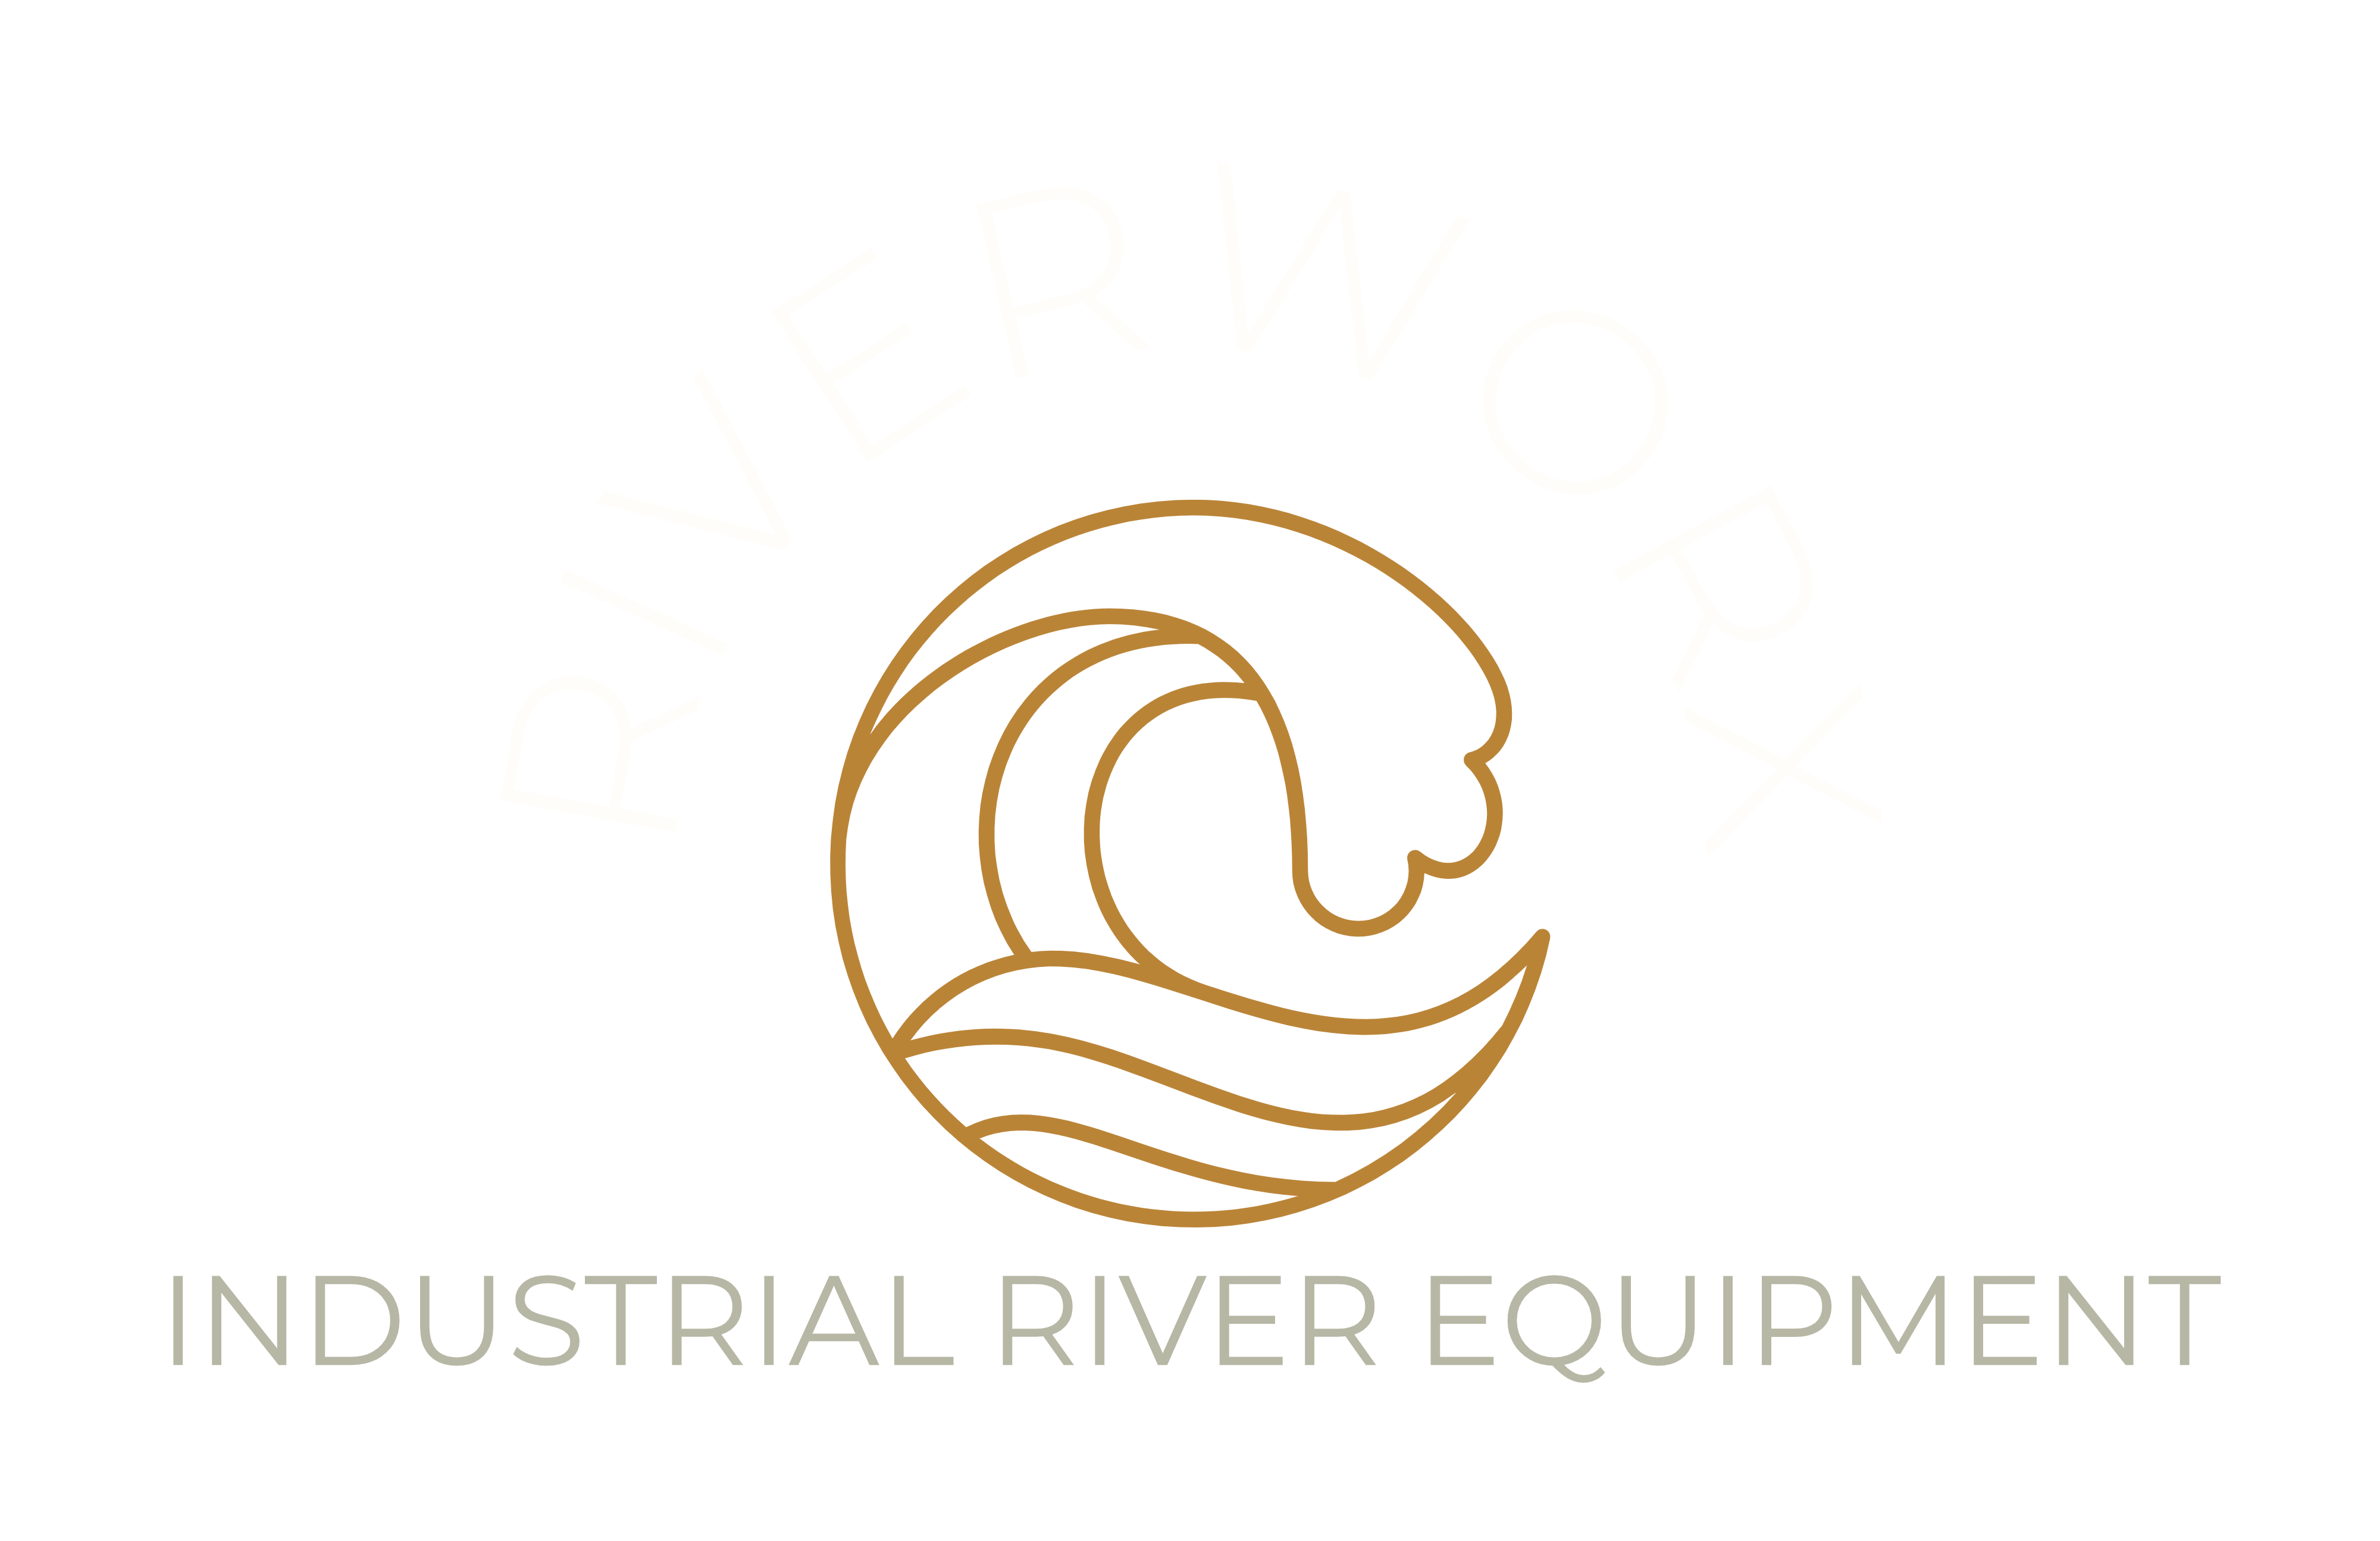 Riverworx